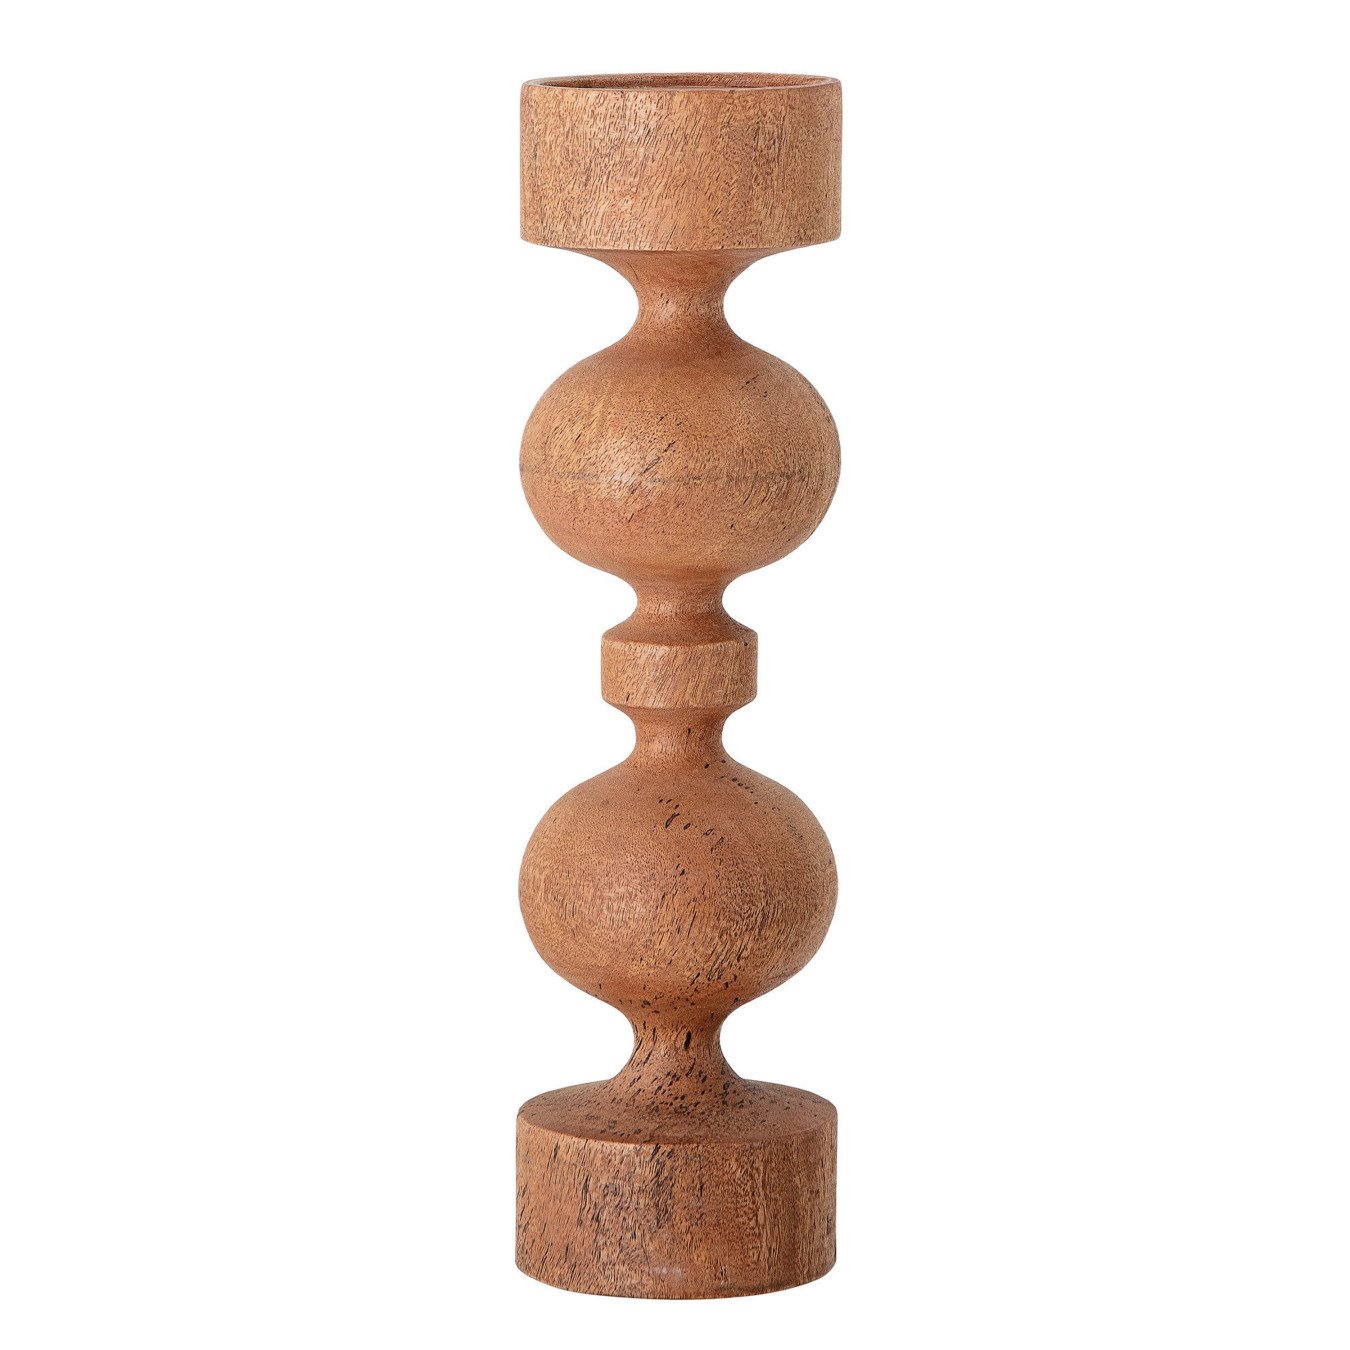 18"H Carved Mango Wood Candleholder (Holds 4" Pillar Candle)